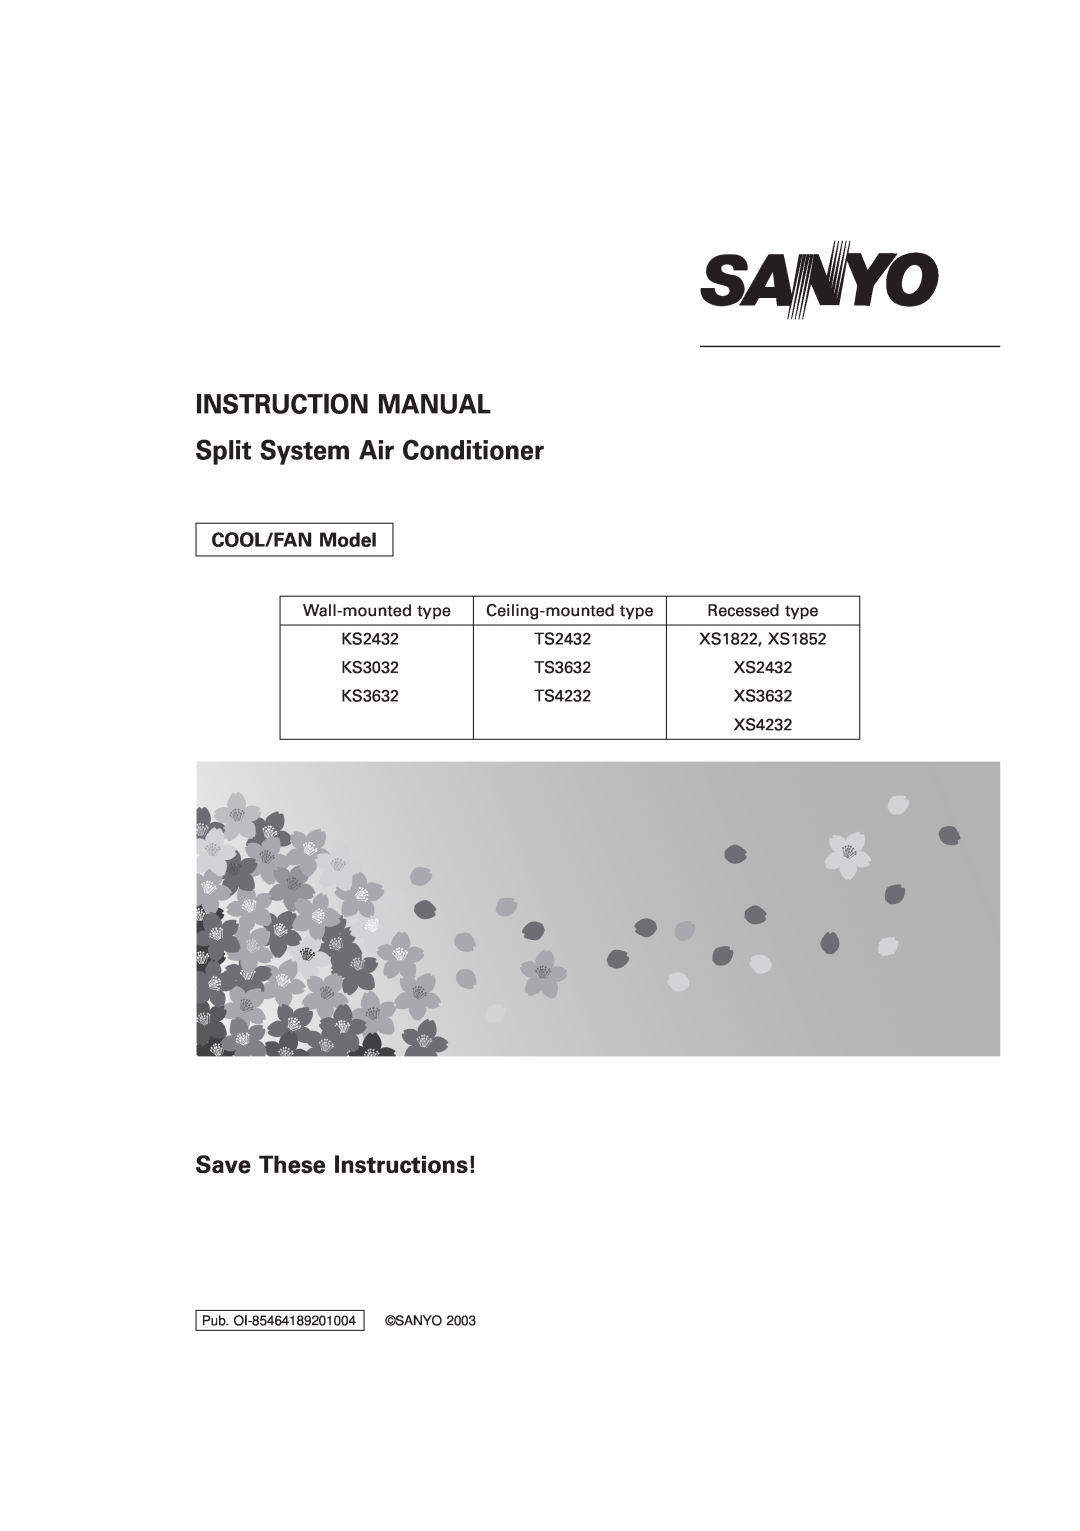 Sanyo C3632, XS3632, CL3632 manual 